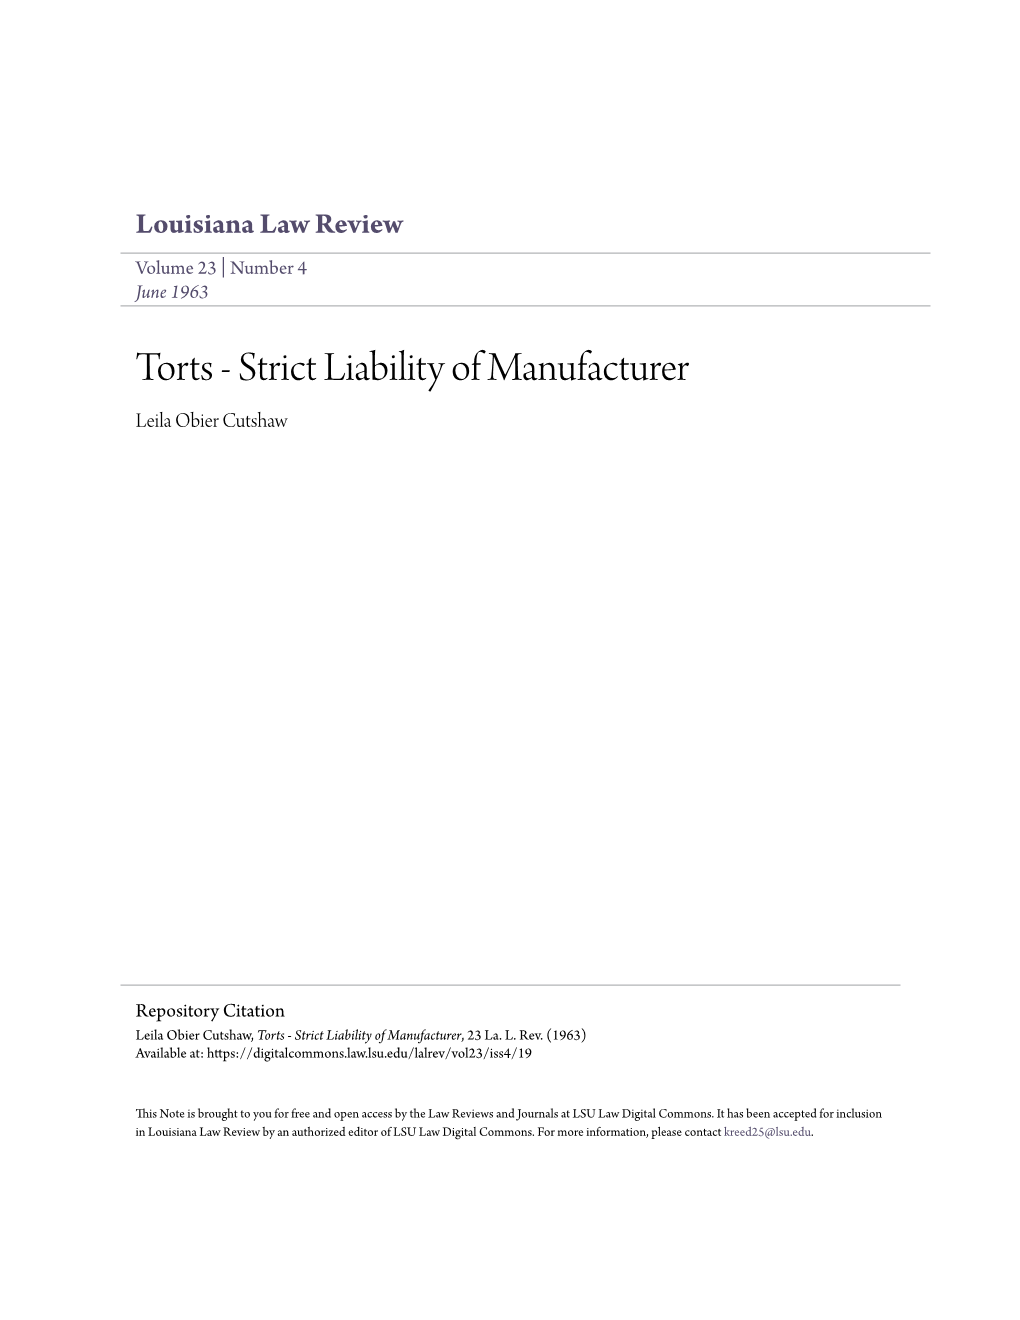 Torts - Strict Liability of Manufacturer Leila Obier Cutshaw